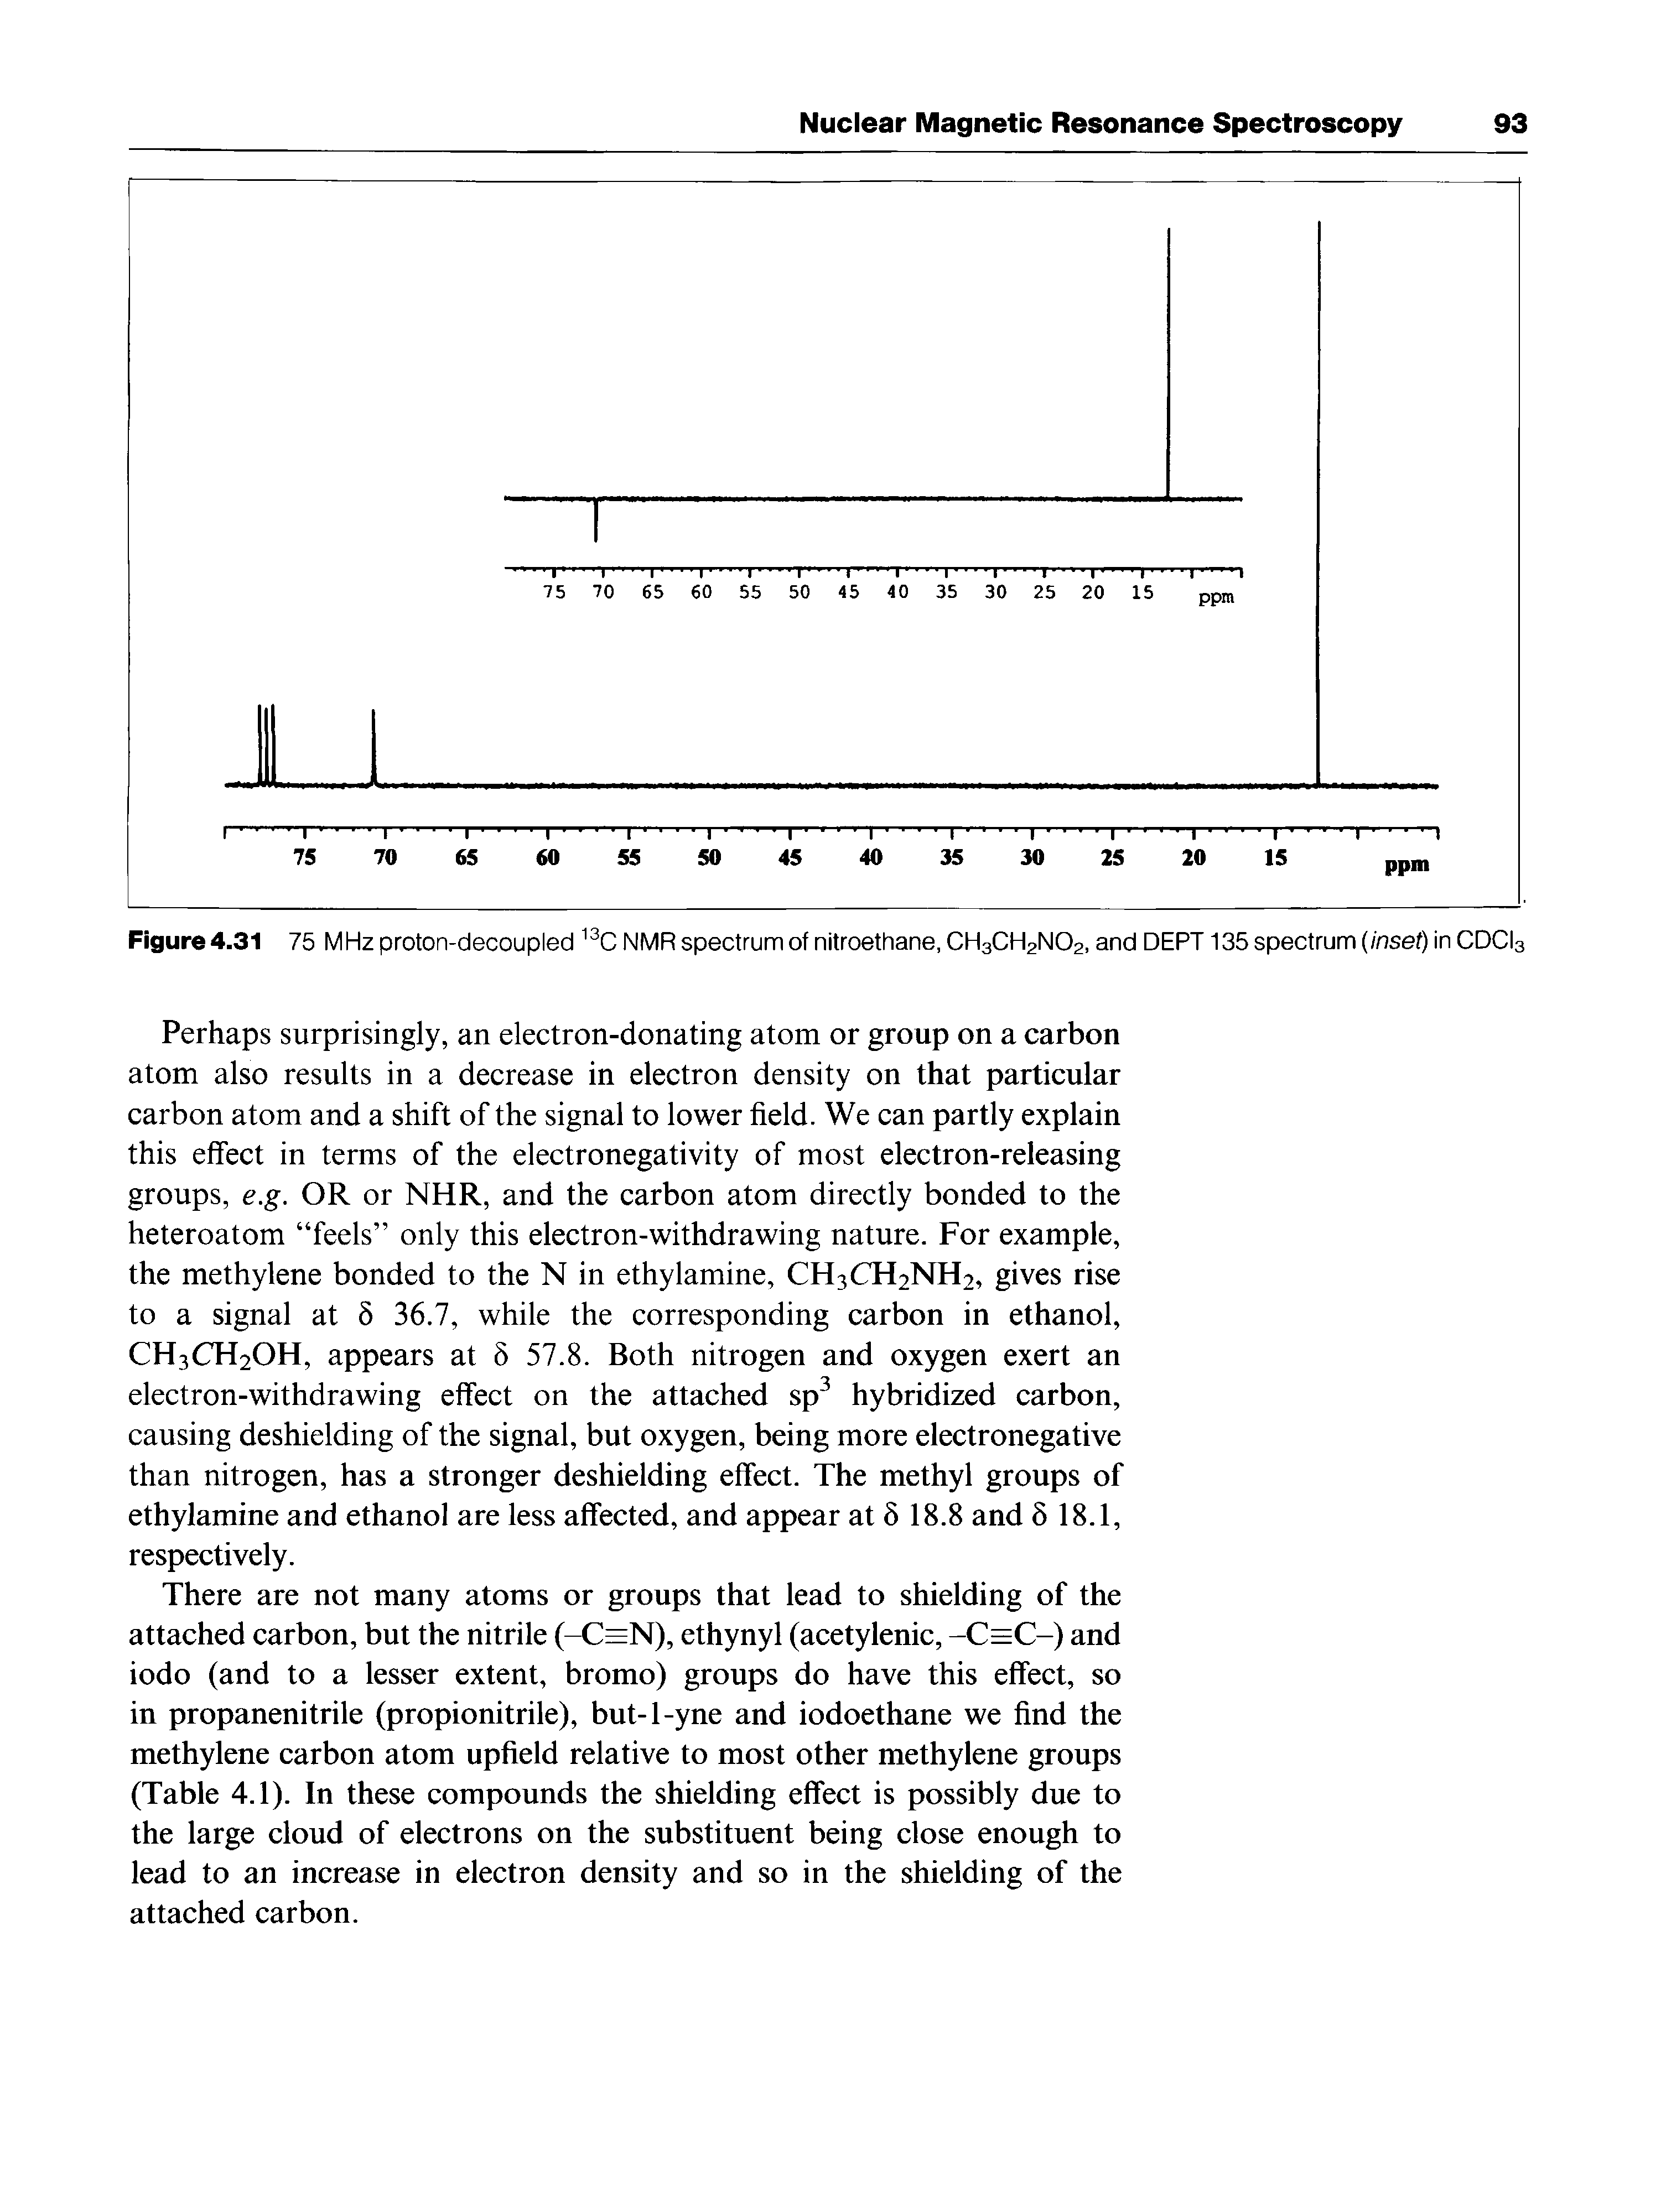 Figure 4.31 75 MHz proton-decoupled NMR spectrum of nitroethane, CH3CH2NO2, and DEPT 135 spectrum (/nsef) in CDCI3...